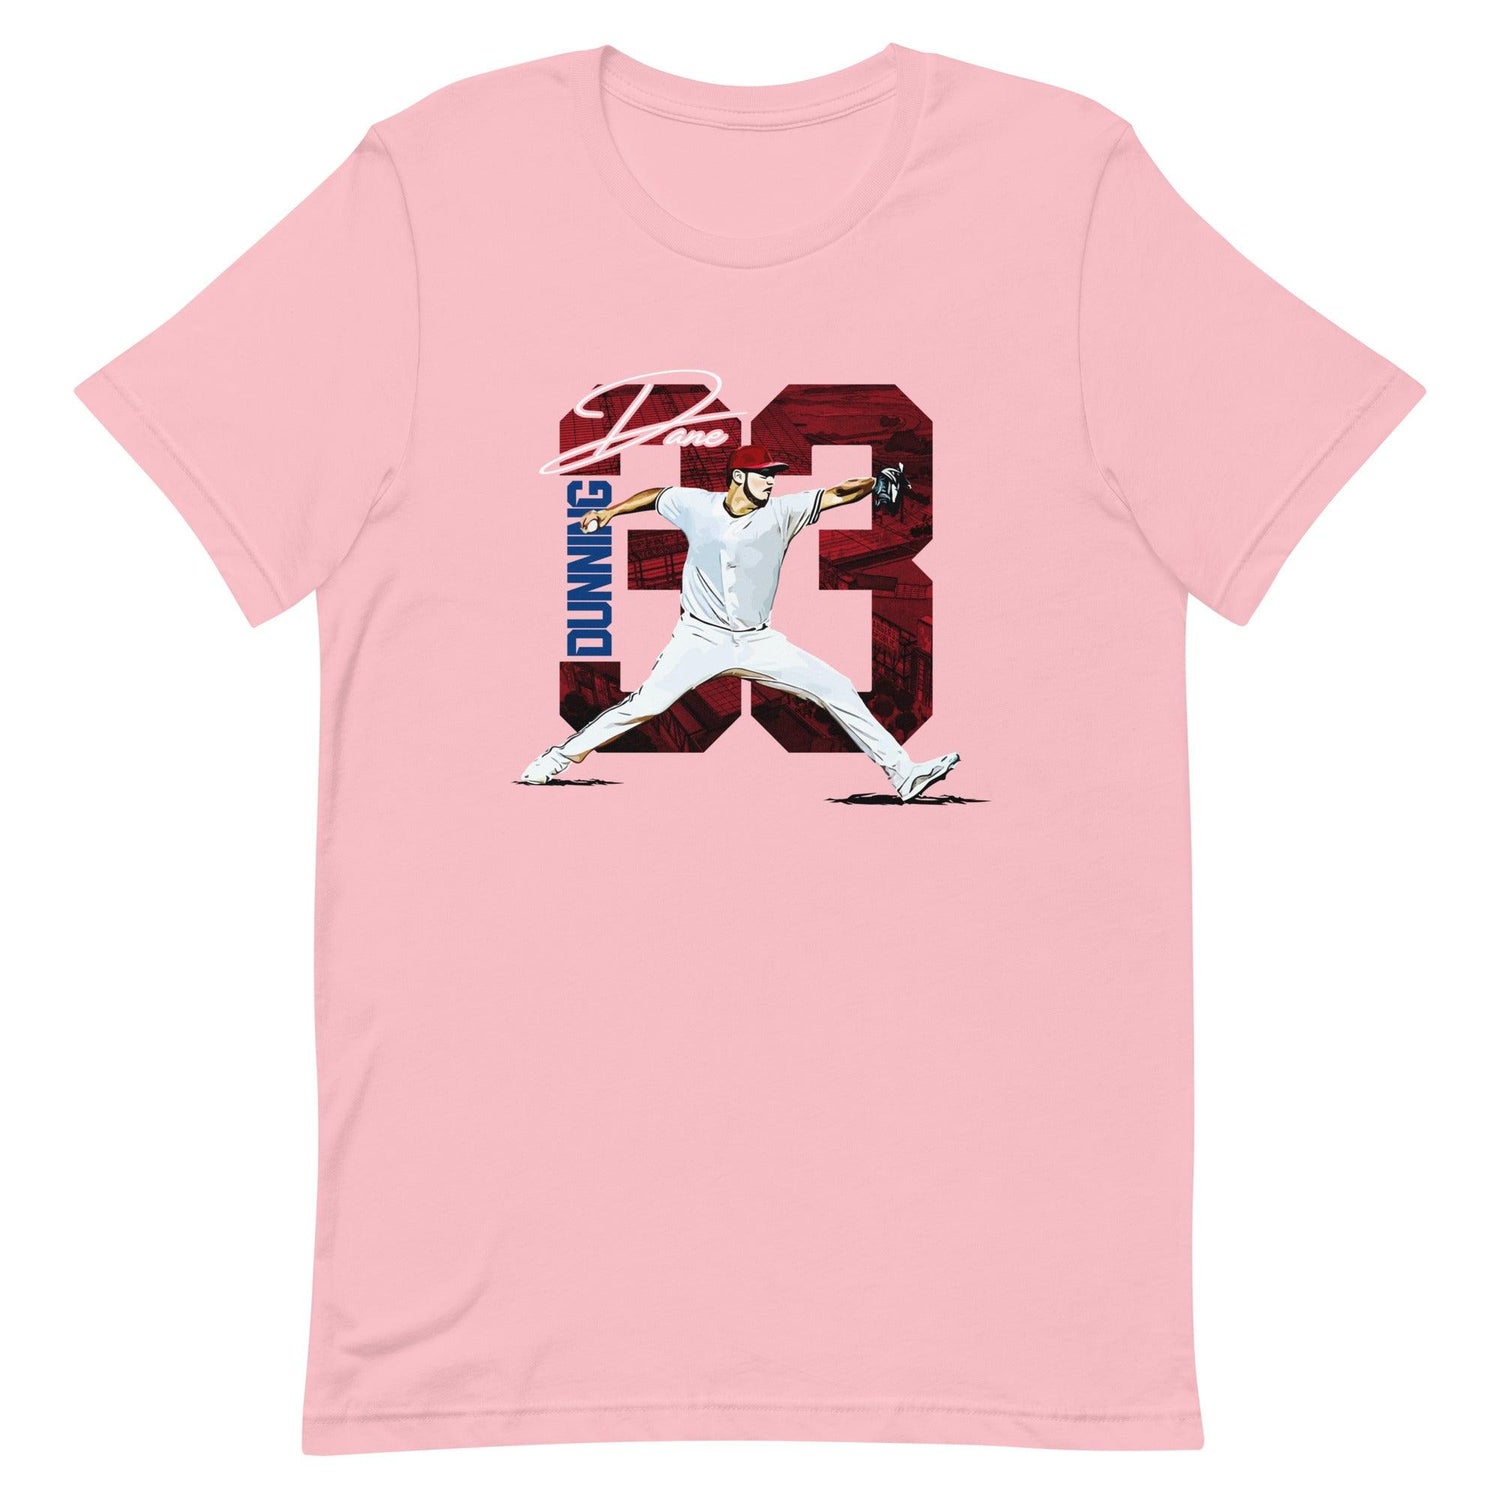 Dane Dunning "Strikeout" t-shirt - Fan Arch